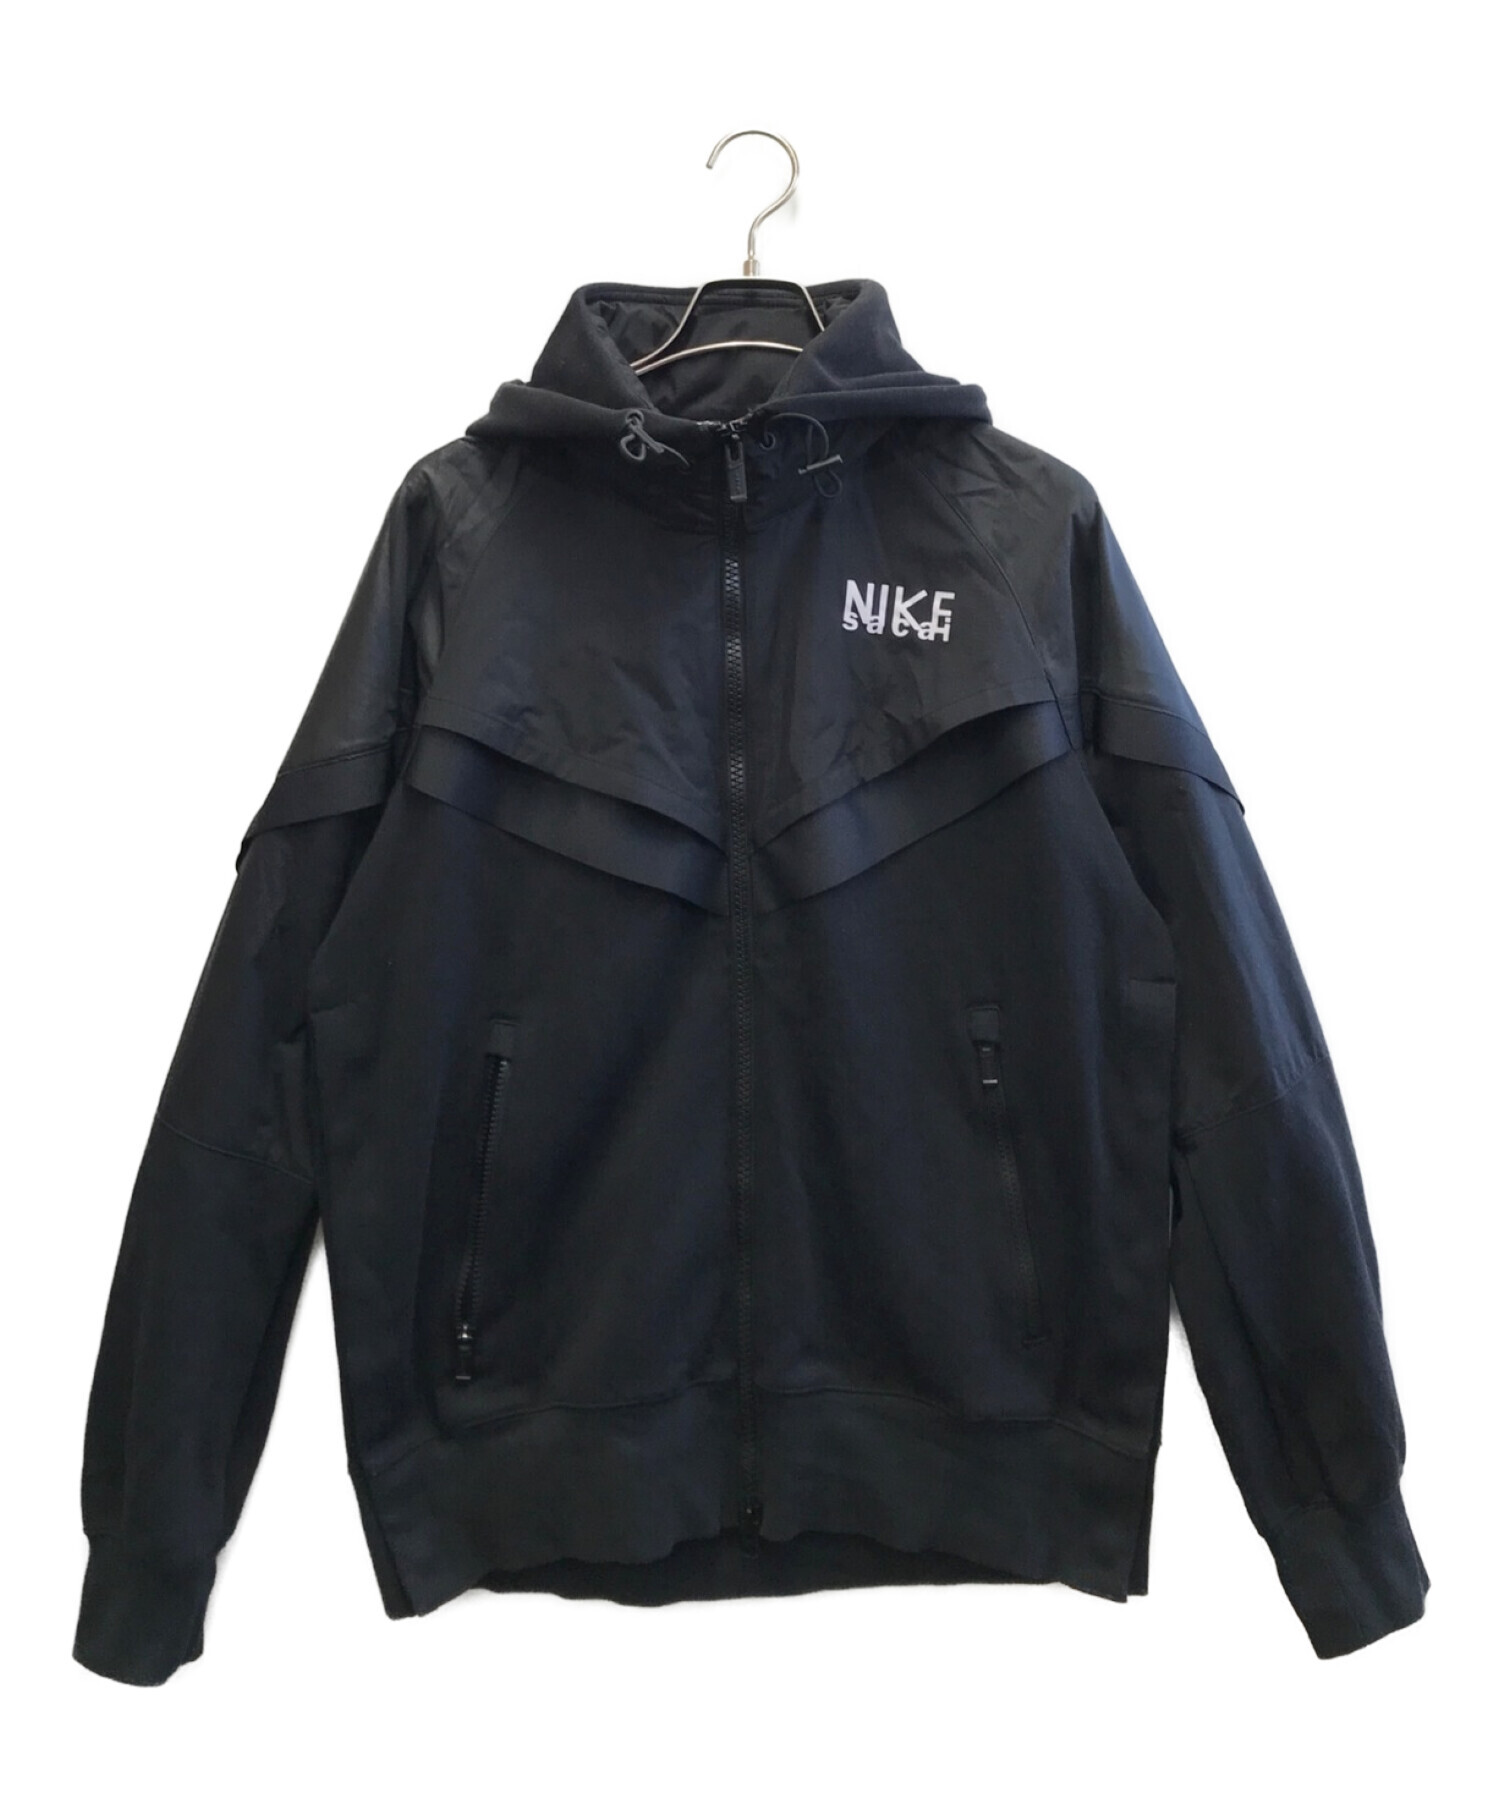 NIKE×sacai (ナイキ×サカイ) Full Zip Hoodie ブラック サイズ:170/88A